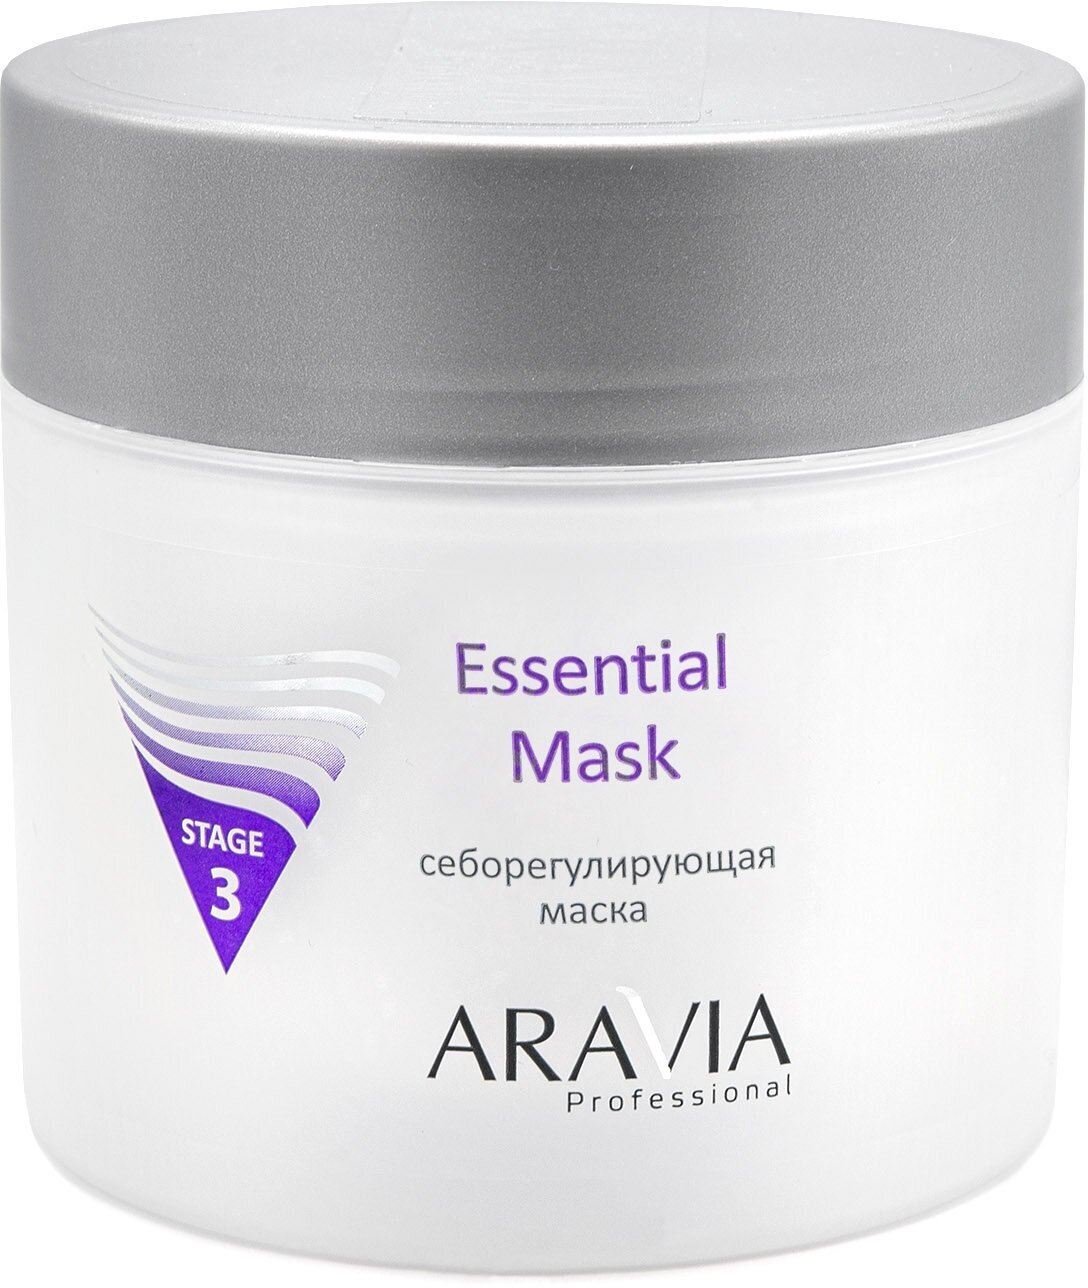 ARAVIA Professional - Себорегулирующая маска Essential Mask, 300 мл.